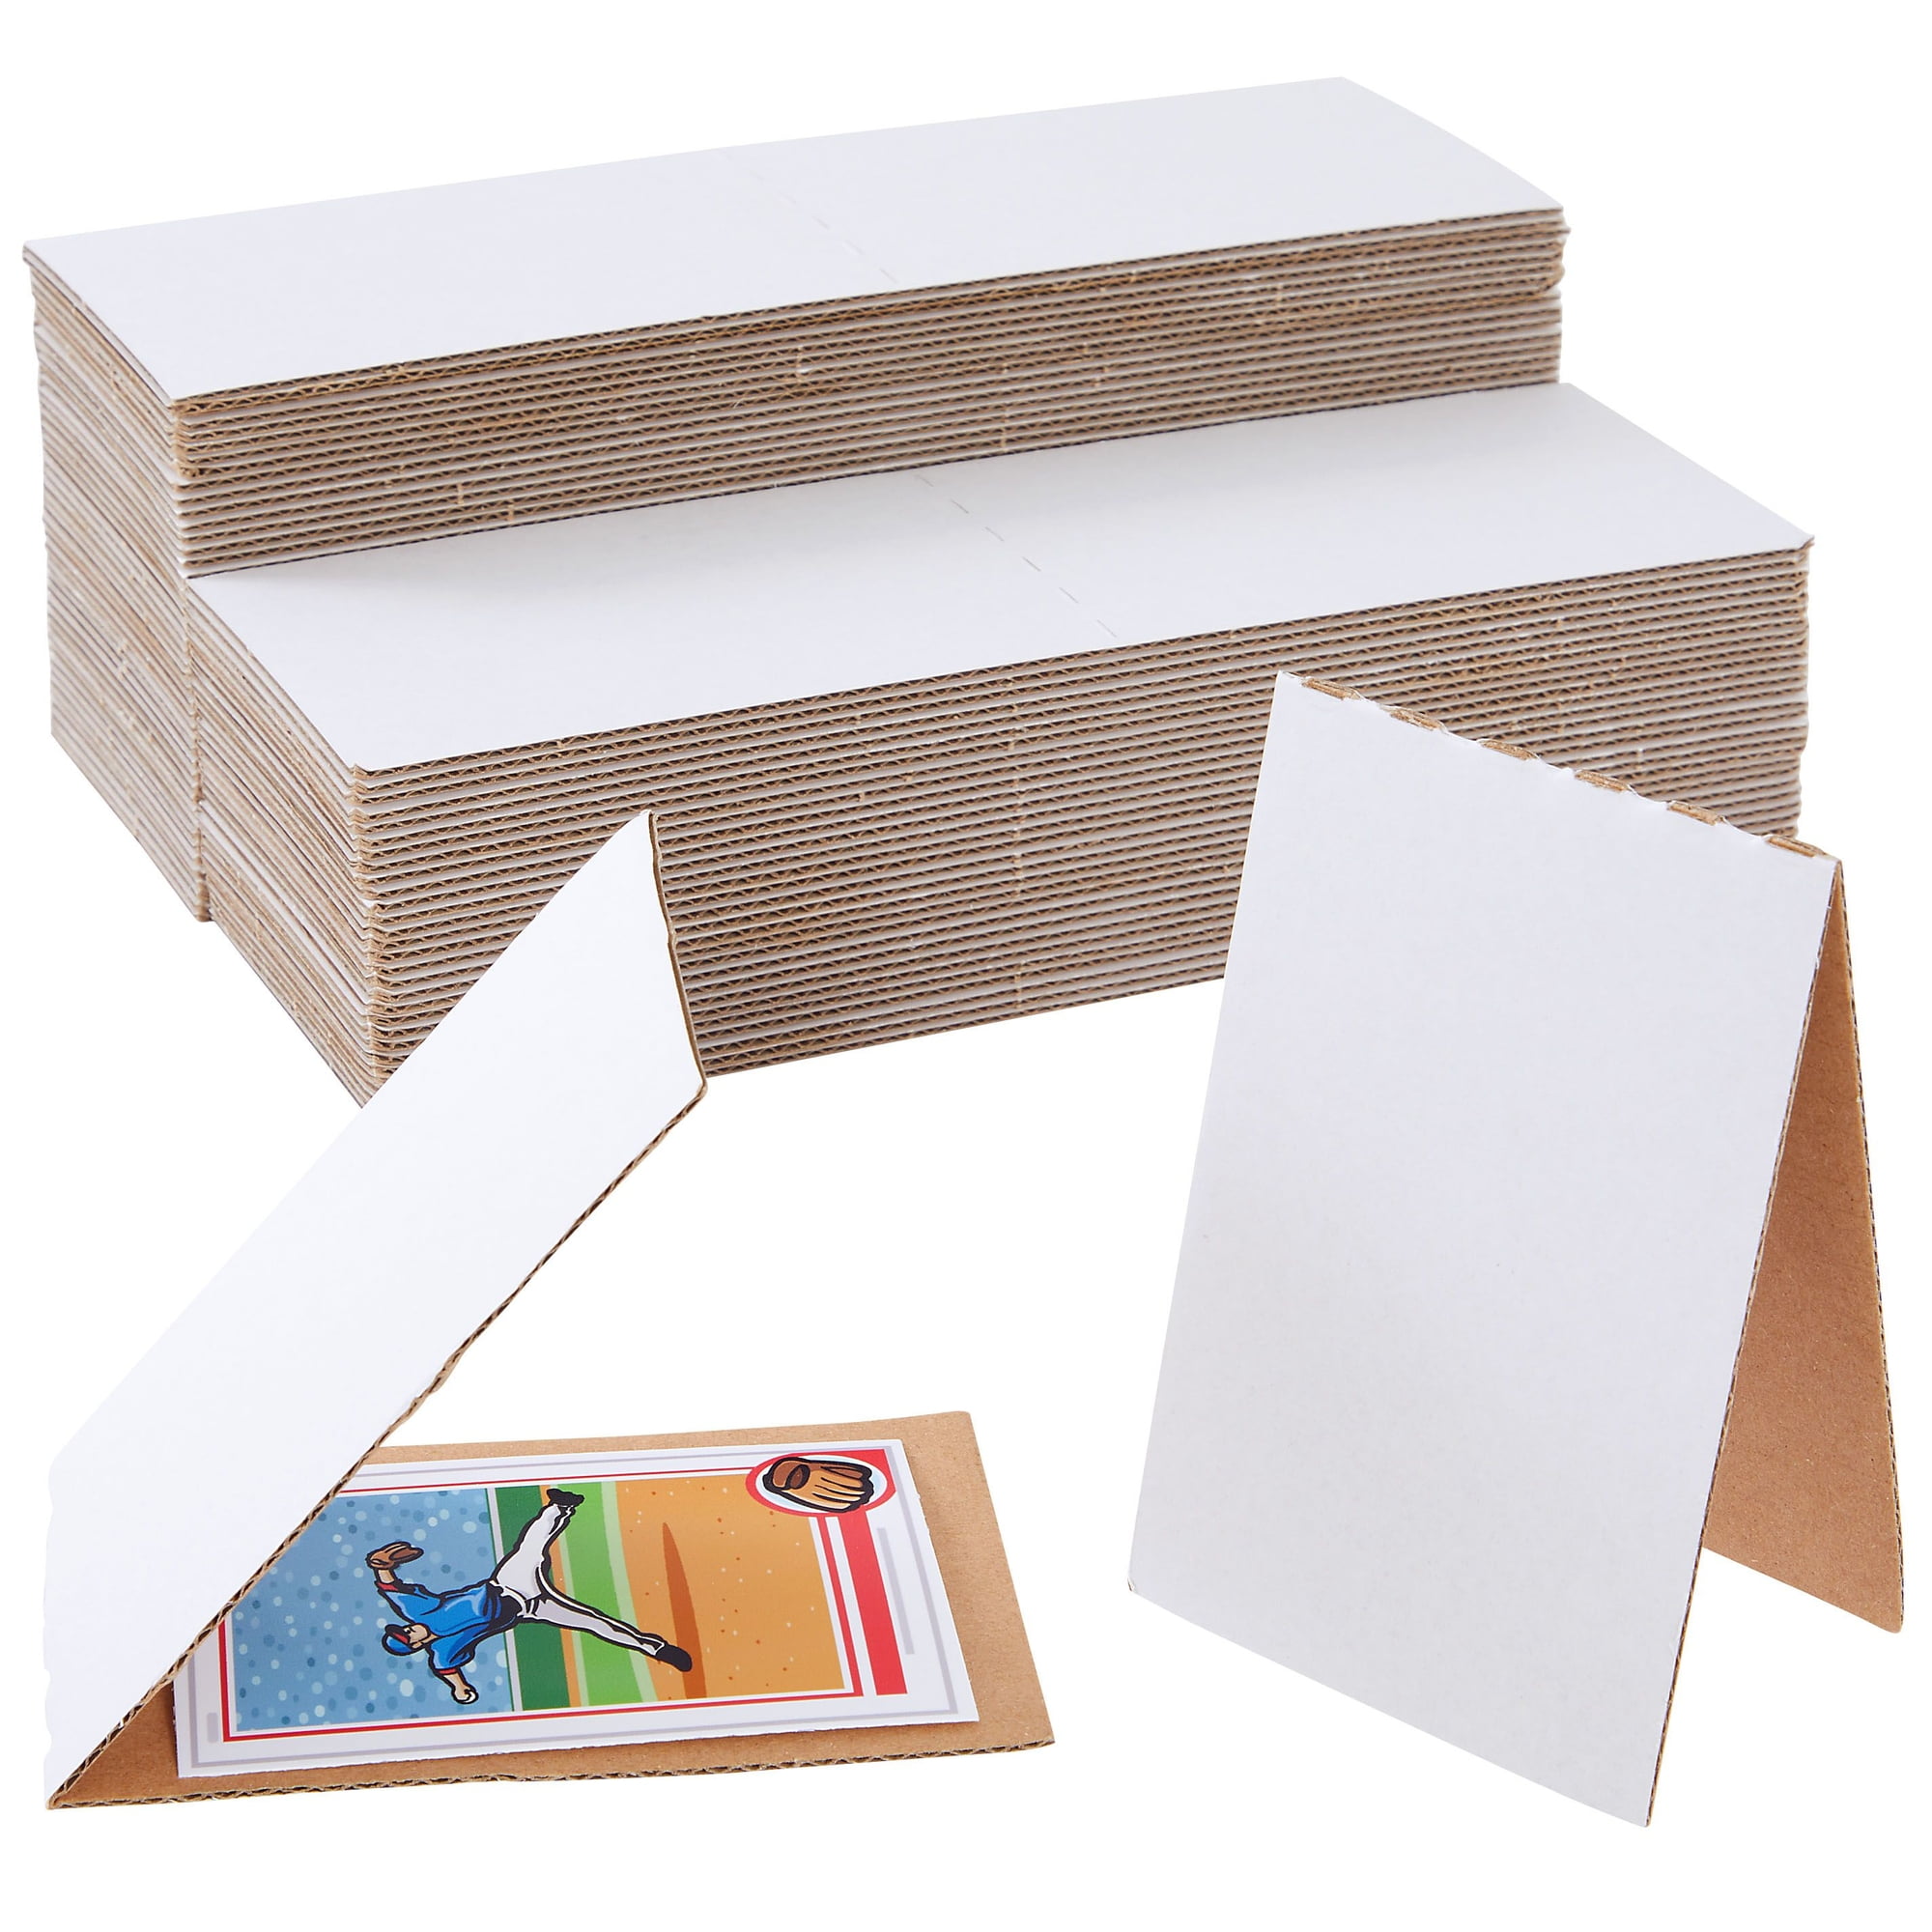 400 Packs 3.5x4.5 inch Corrugated Cardboard Sheets, Premium White Corrugated Cardboard Inserts Bulk Flat for Sports Card Protectors, Trading Card